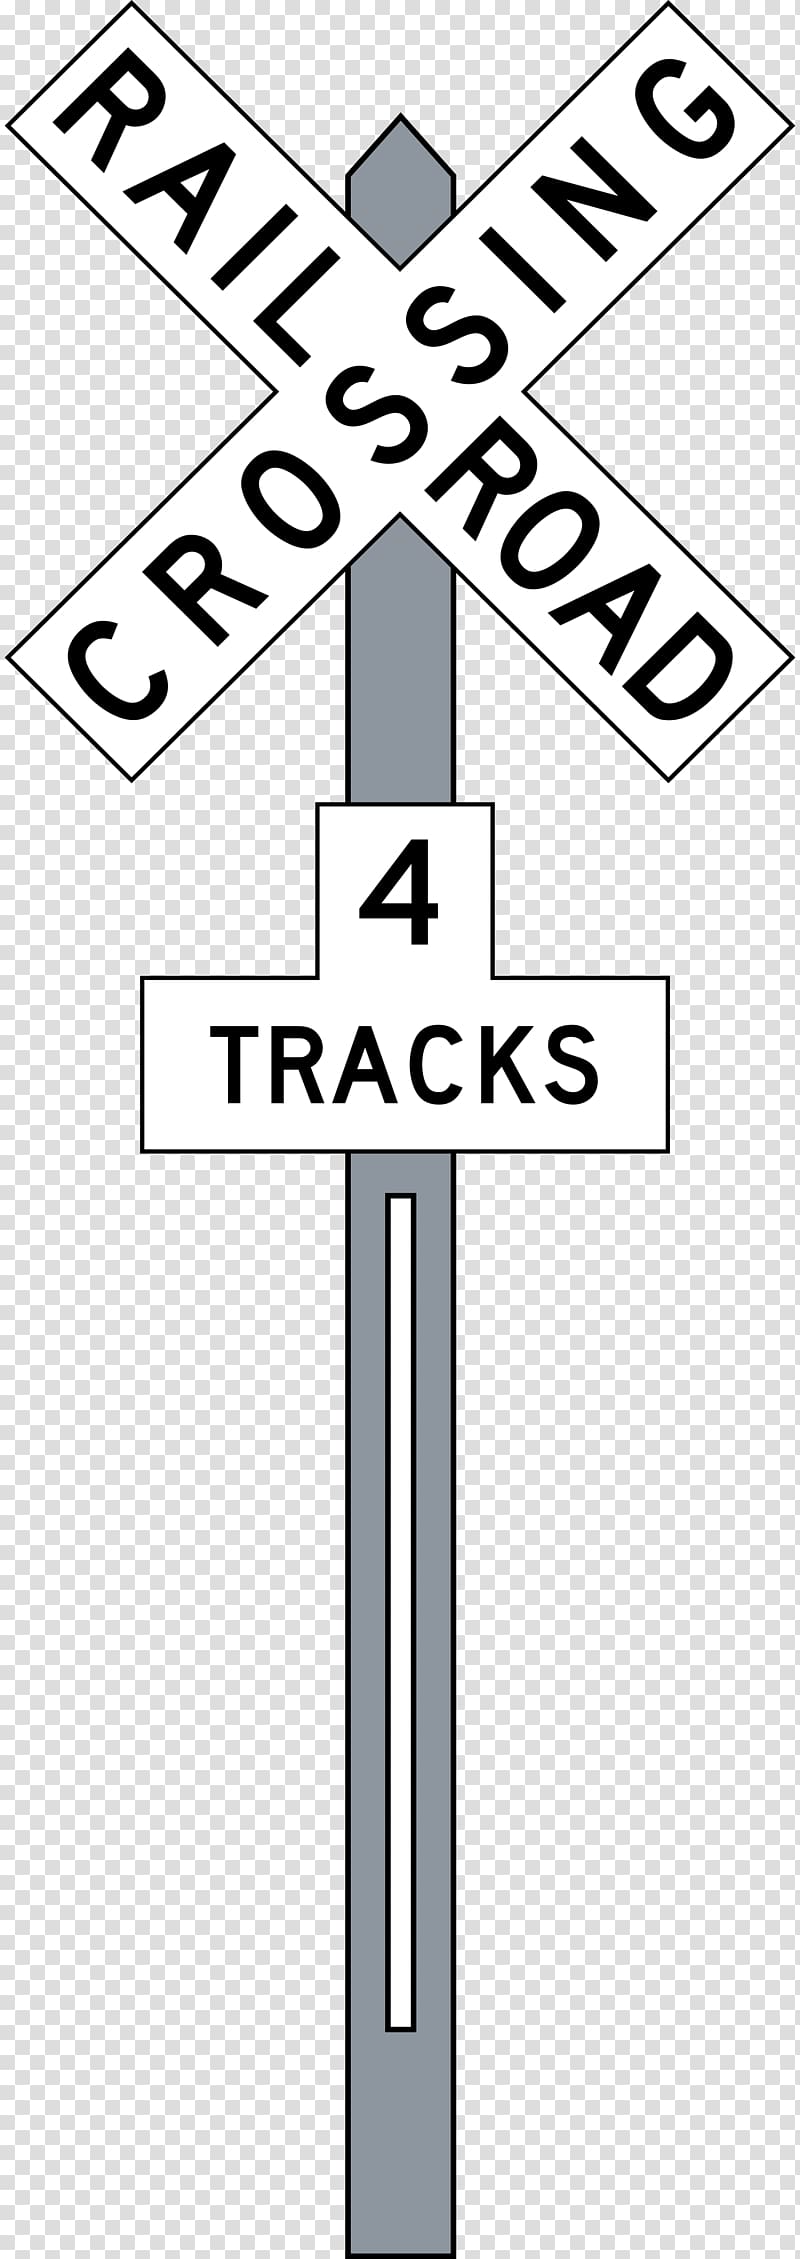 Rail transport Train Level crossing Crossbuck Track, Railroad Crossing Sign transparent background PNG clipart